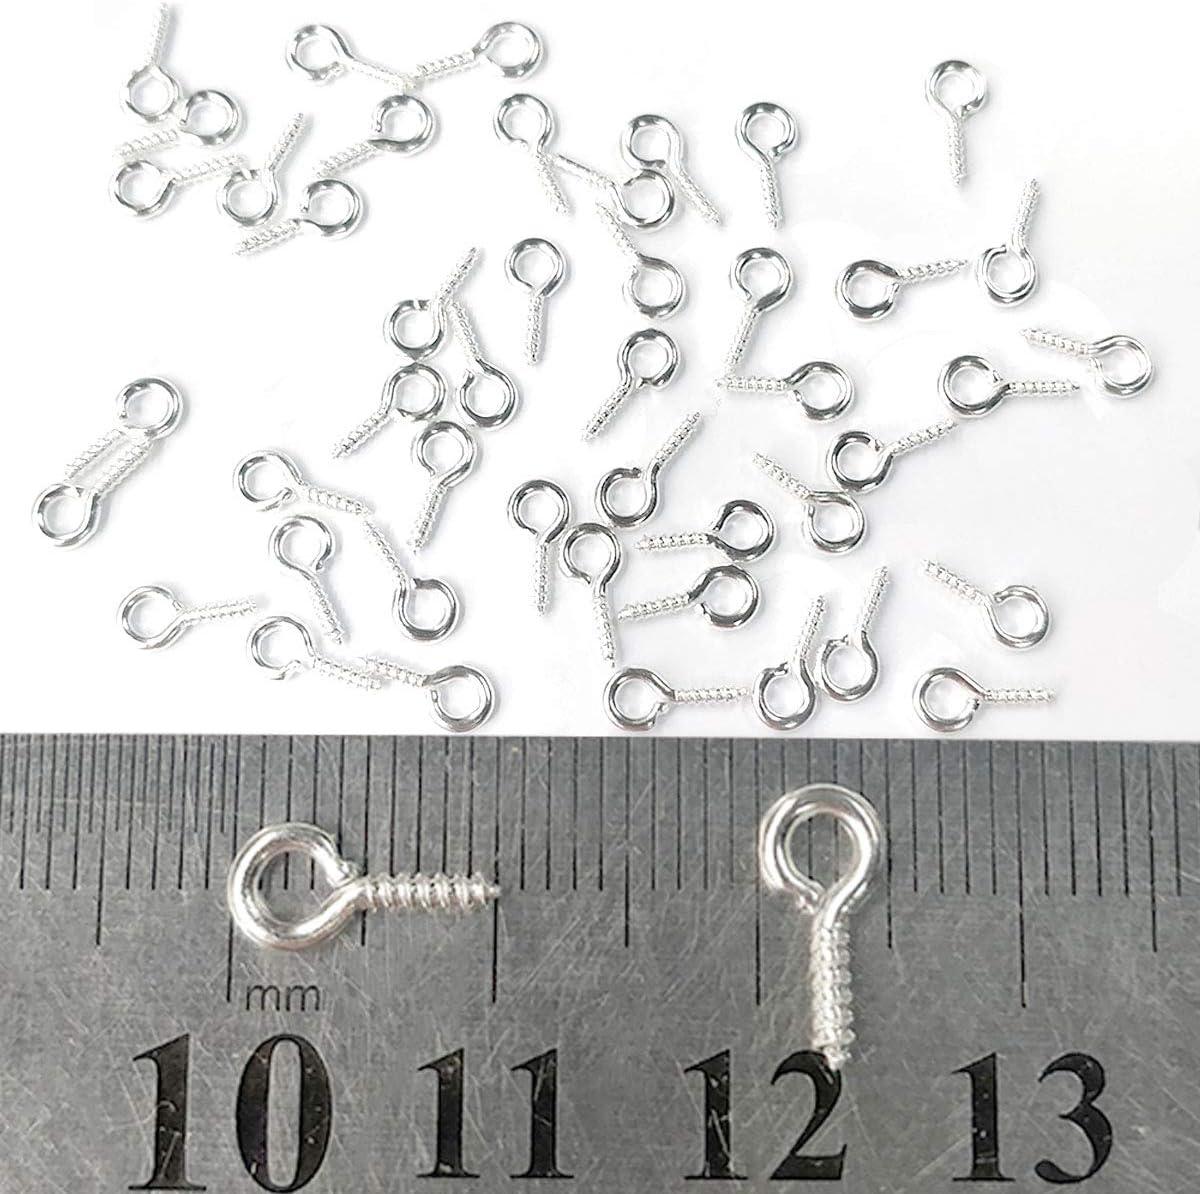 300PCS Small Screw Eye Pins,10 x 5mm Eye pins Hooks,Mini Screw Eye Pin Peg  for Arts & Crafts Projects,Self Tapping Screws Hooks Ring for Cork Top  Bottles & Charm Bead & DIY